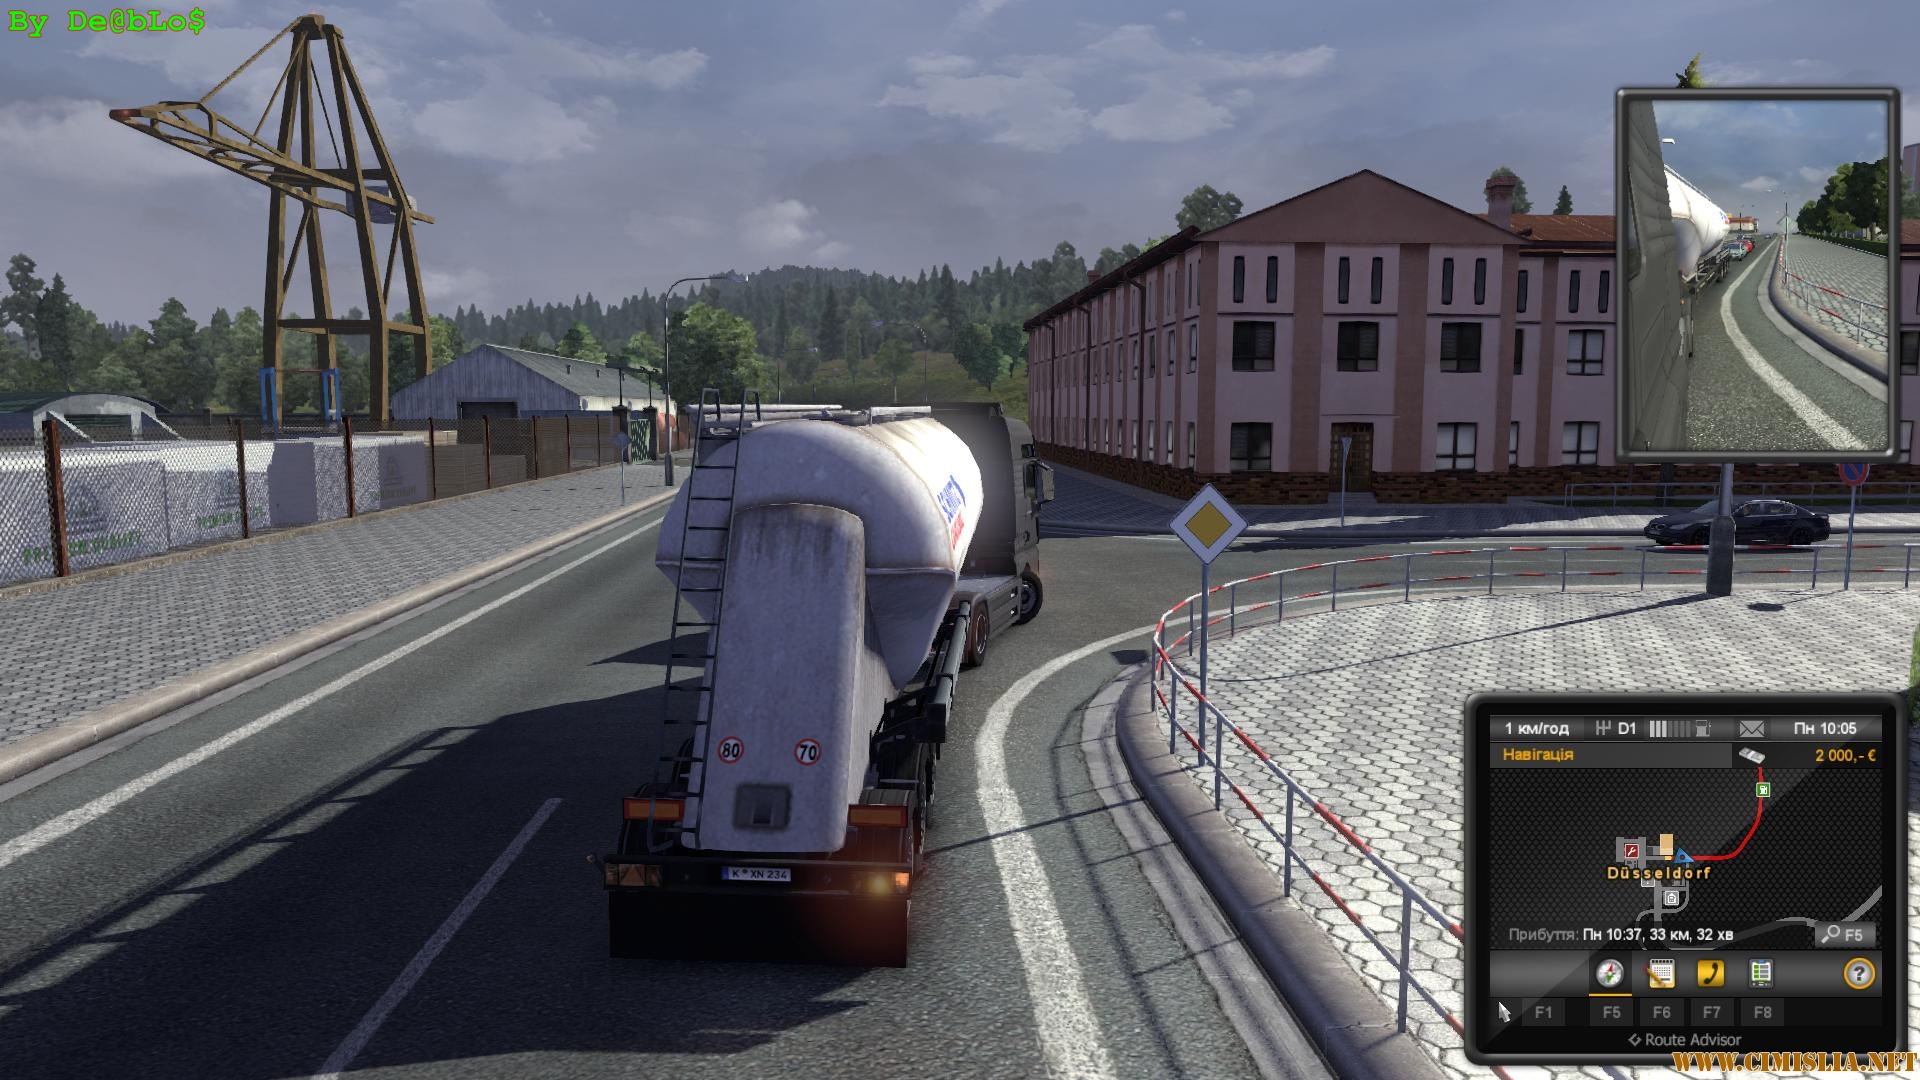 Truck simulator pro 3. Евро трак симулятор 3. Евротур симулятор 3. Euro Truck Simulator 3 PC games. Труск симулятор 2 ЗС.